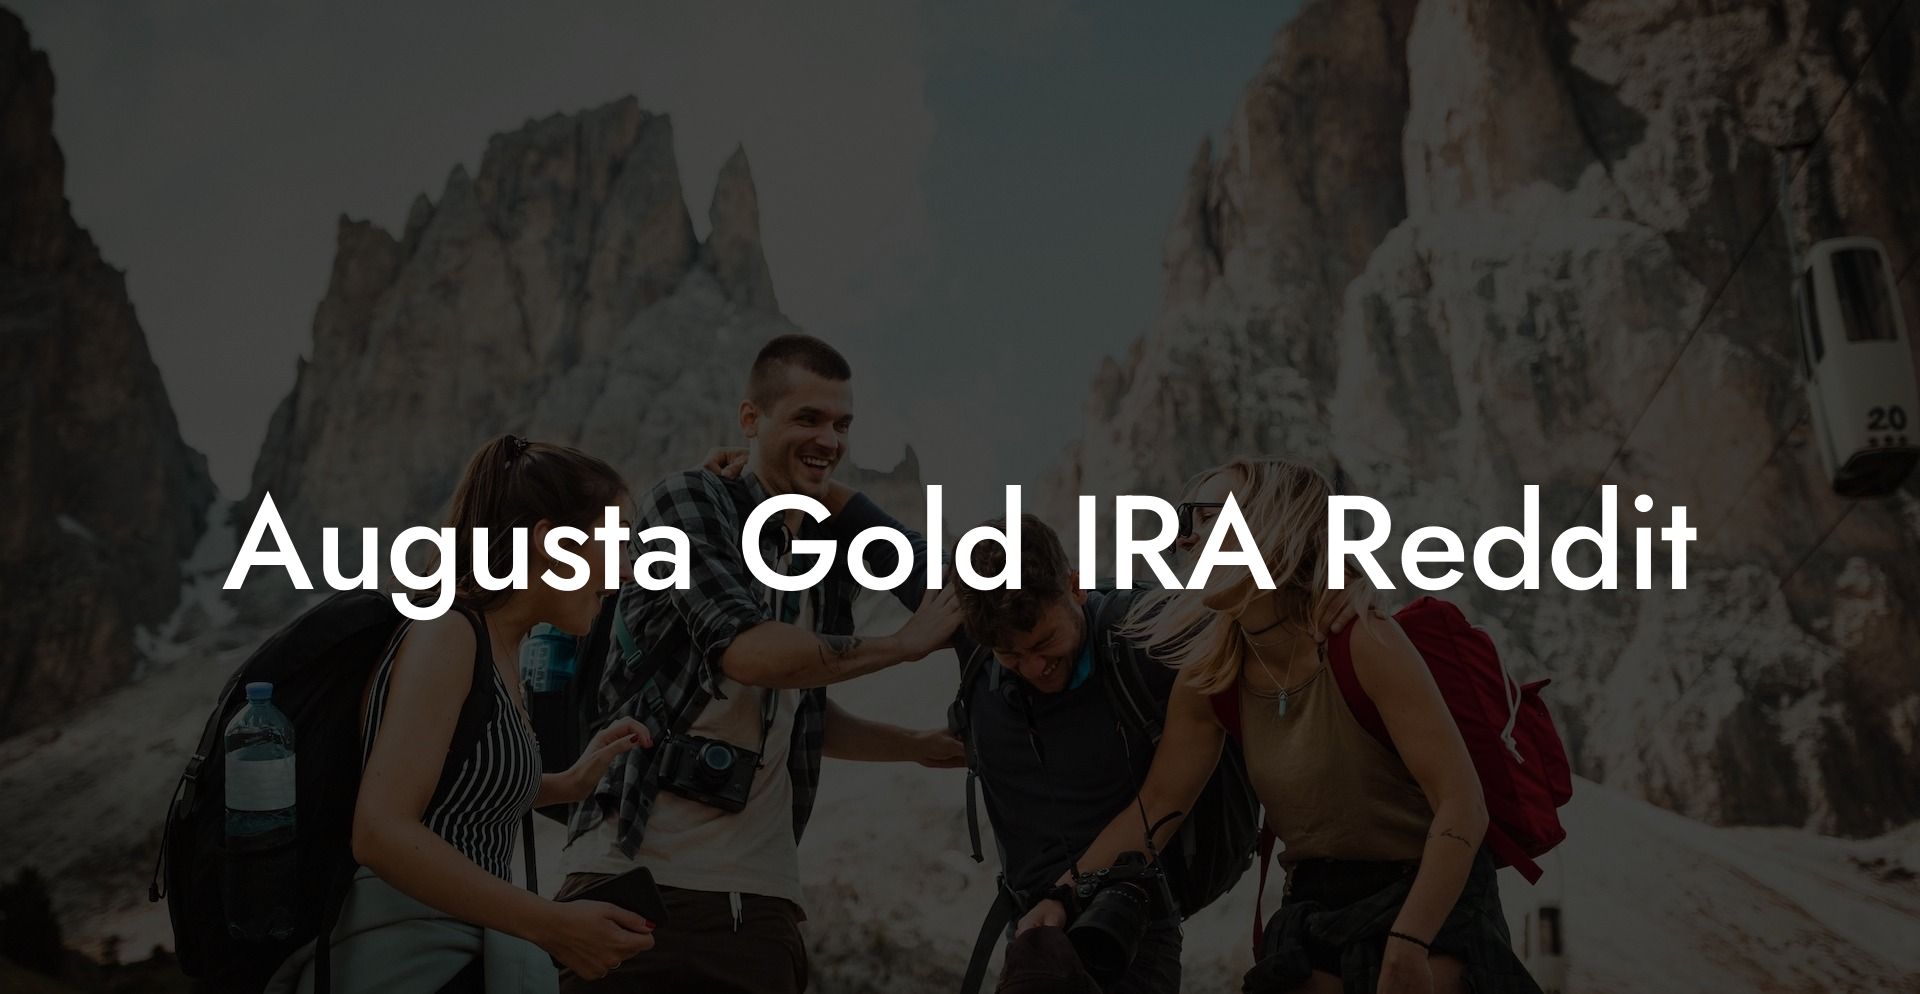 Augusta Gold IRA Reddit